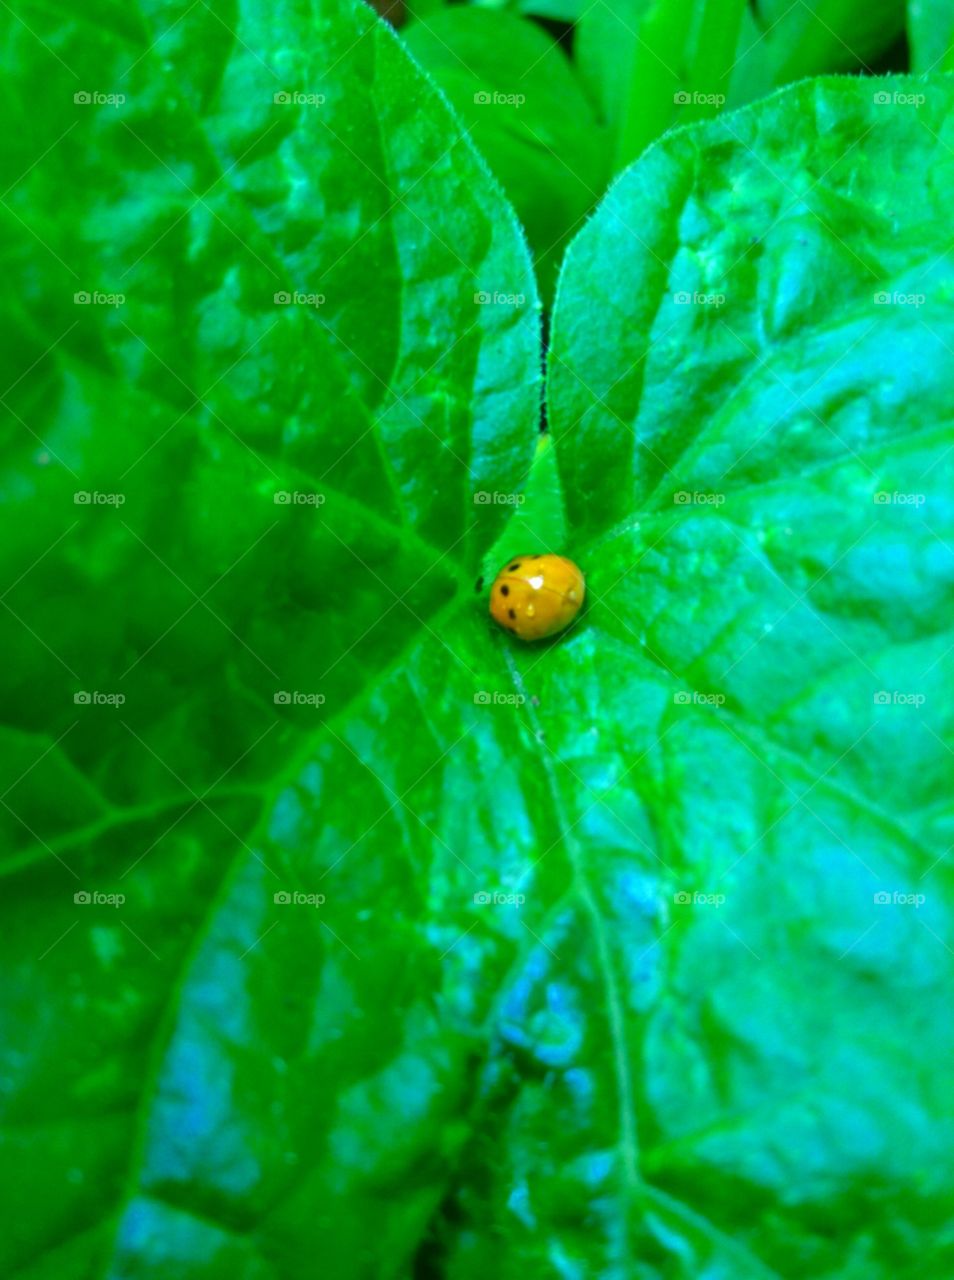 Ladybug hiding